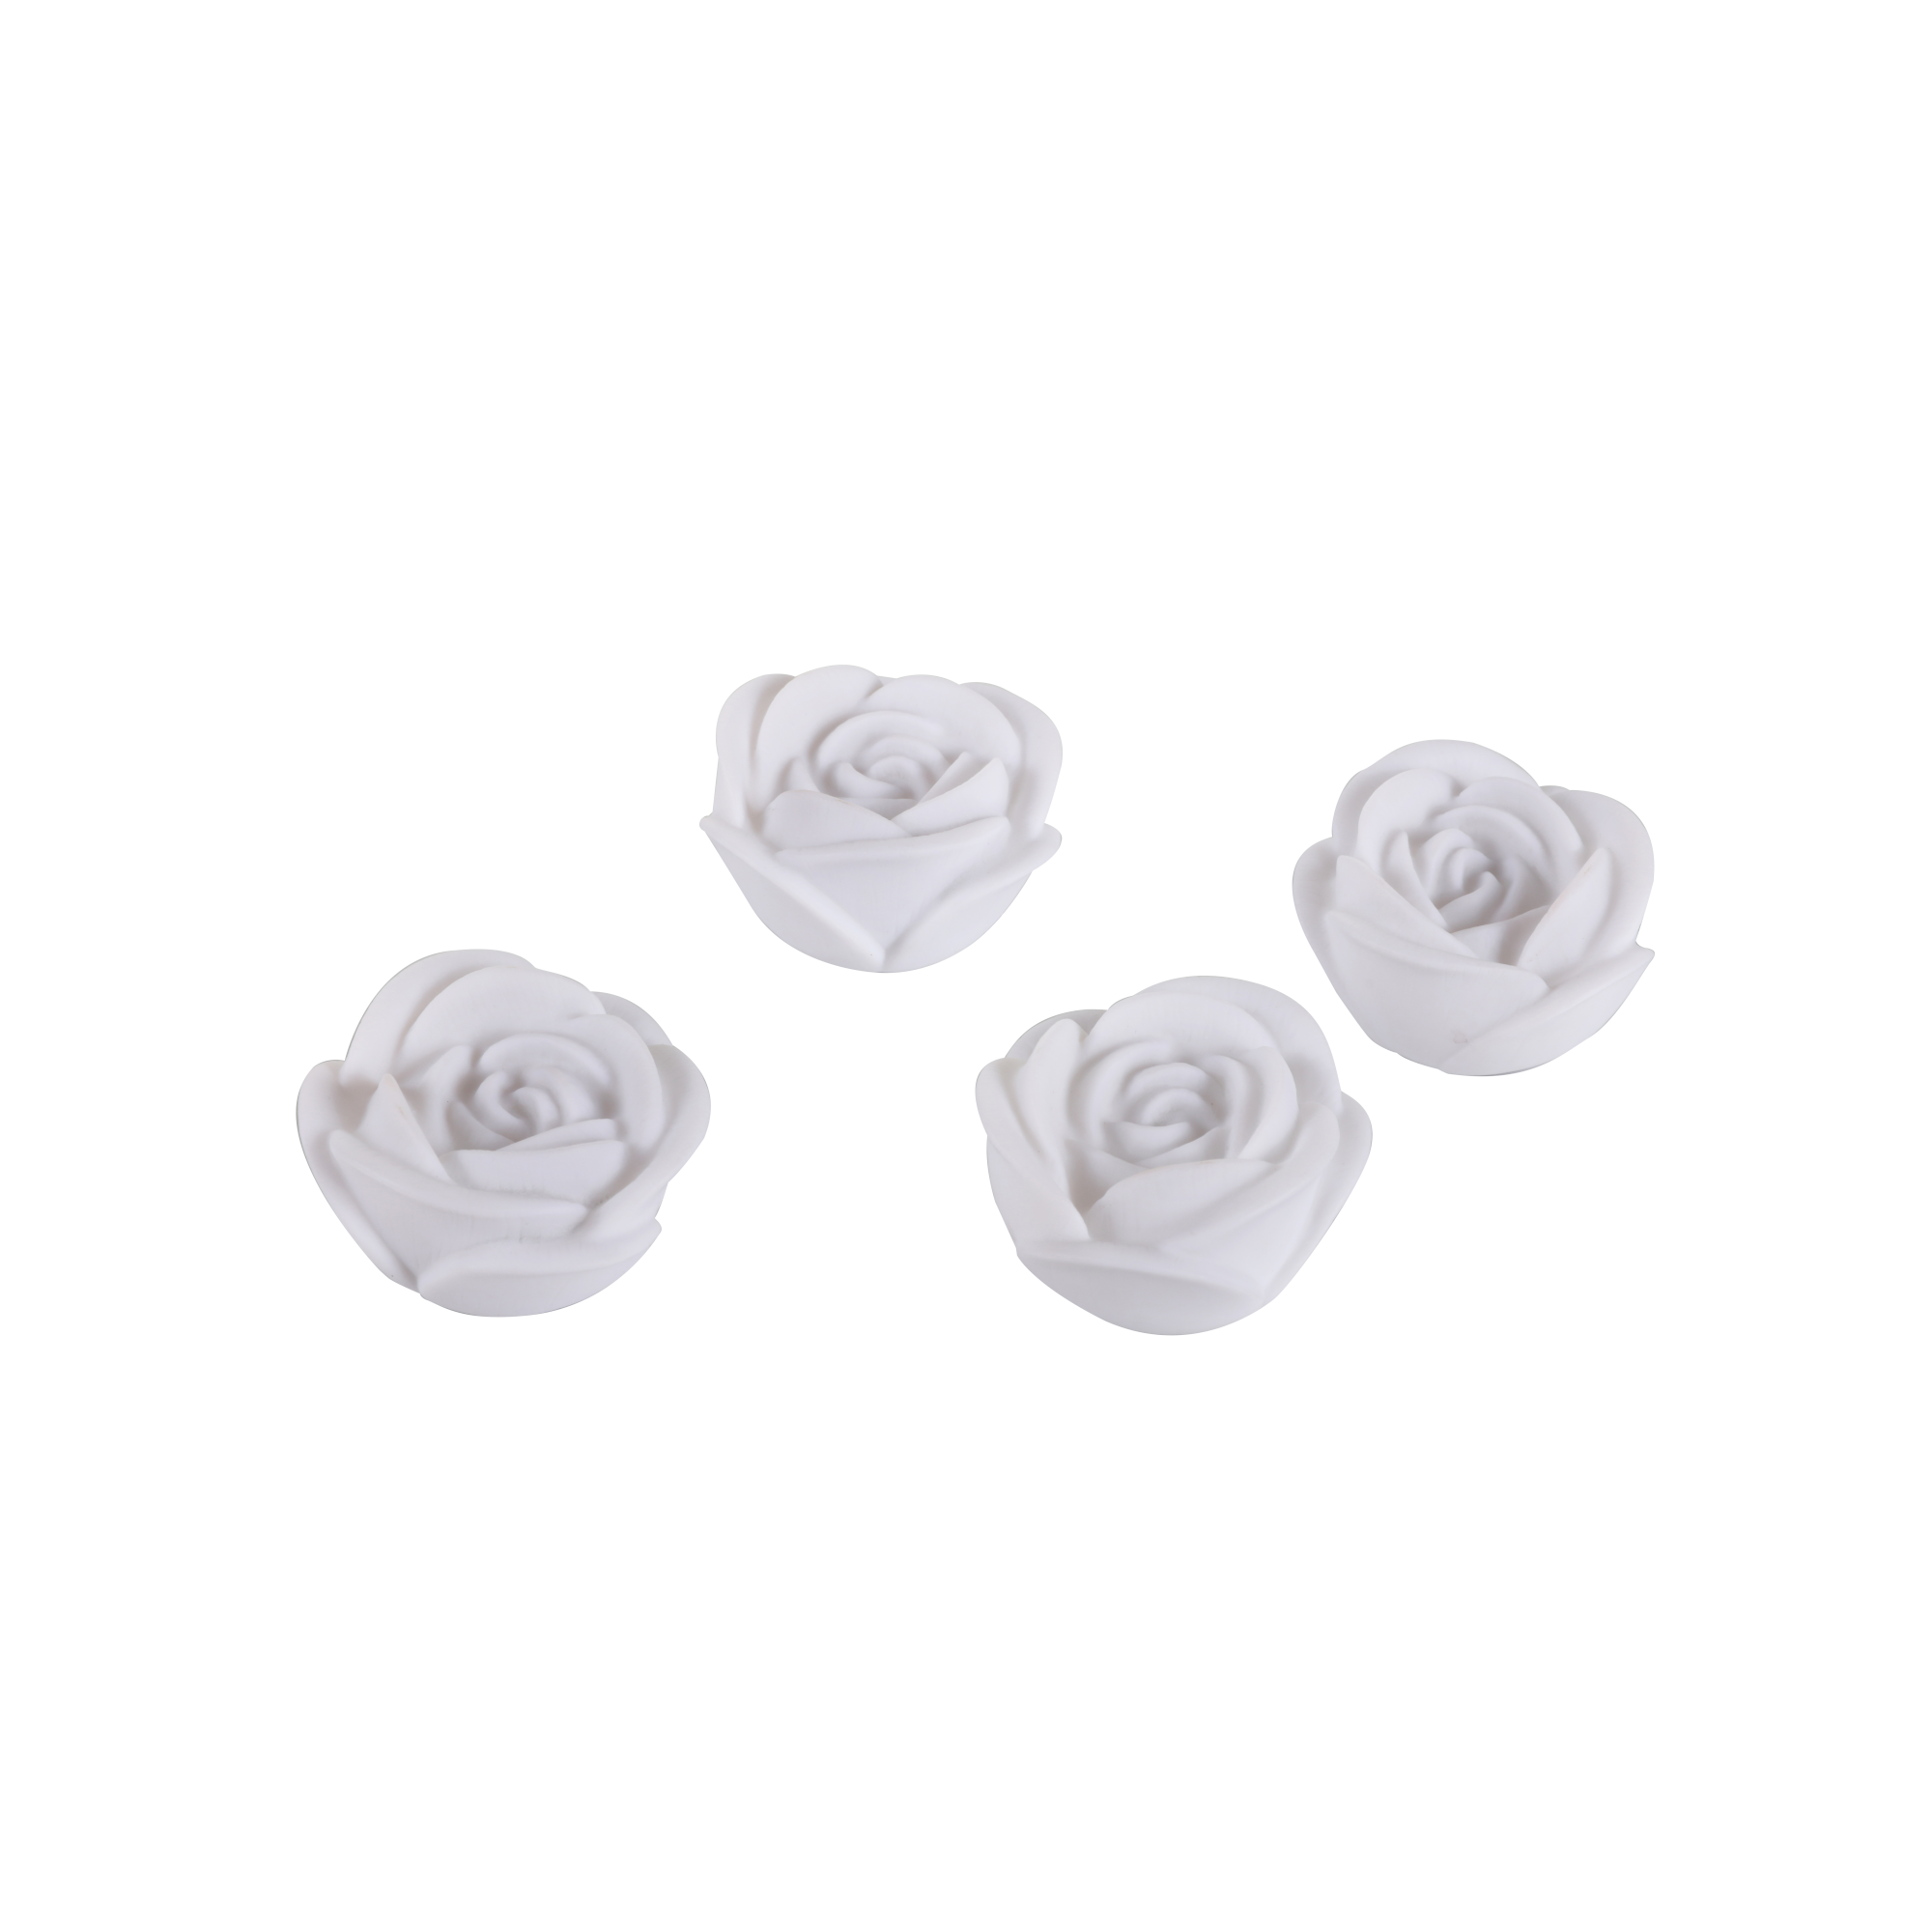 LED-Dekolichter 'Roses' Rosen-Motiv Ø 6,5 weiß 4 Stück + product picture